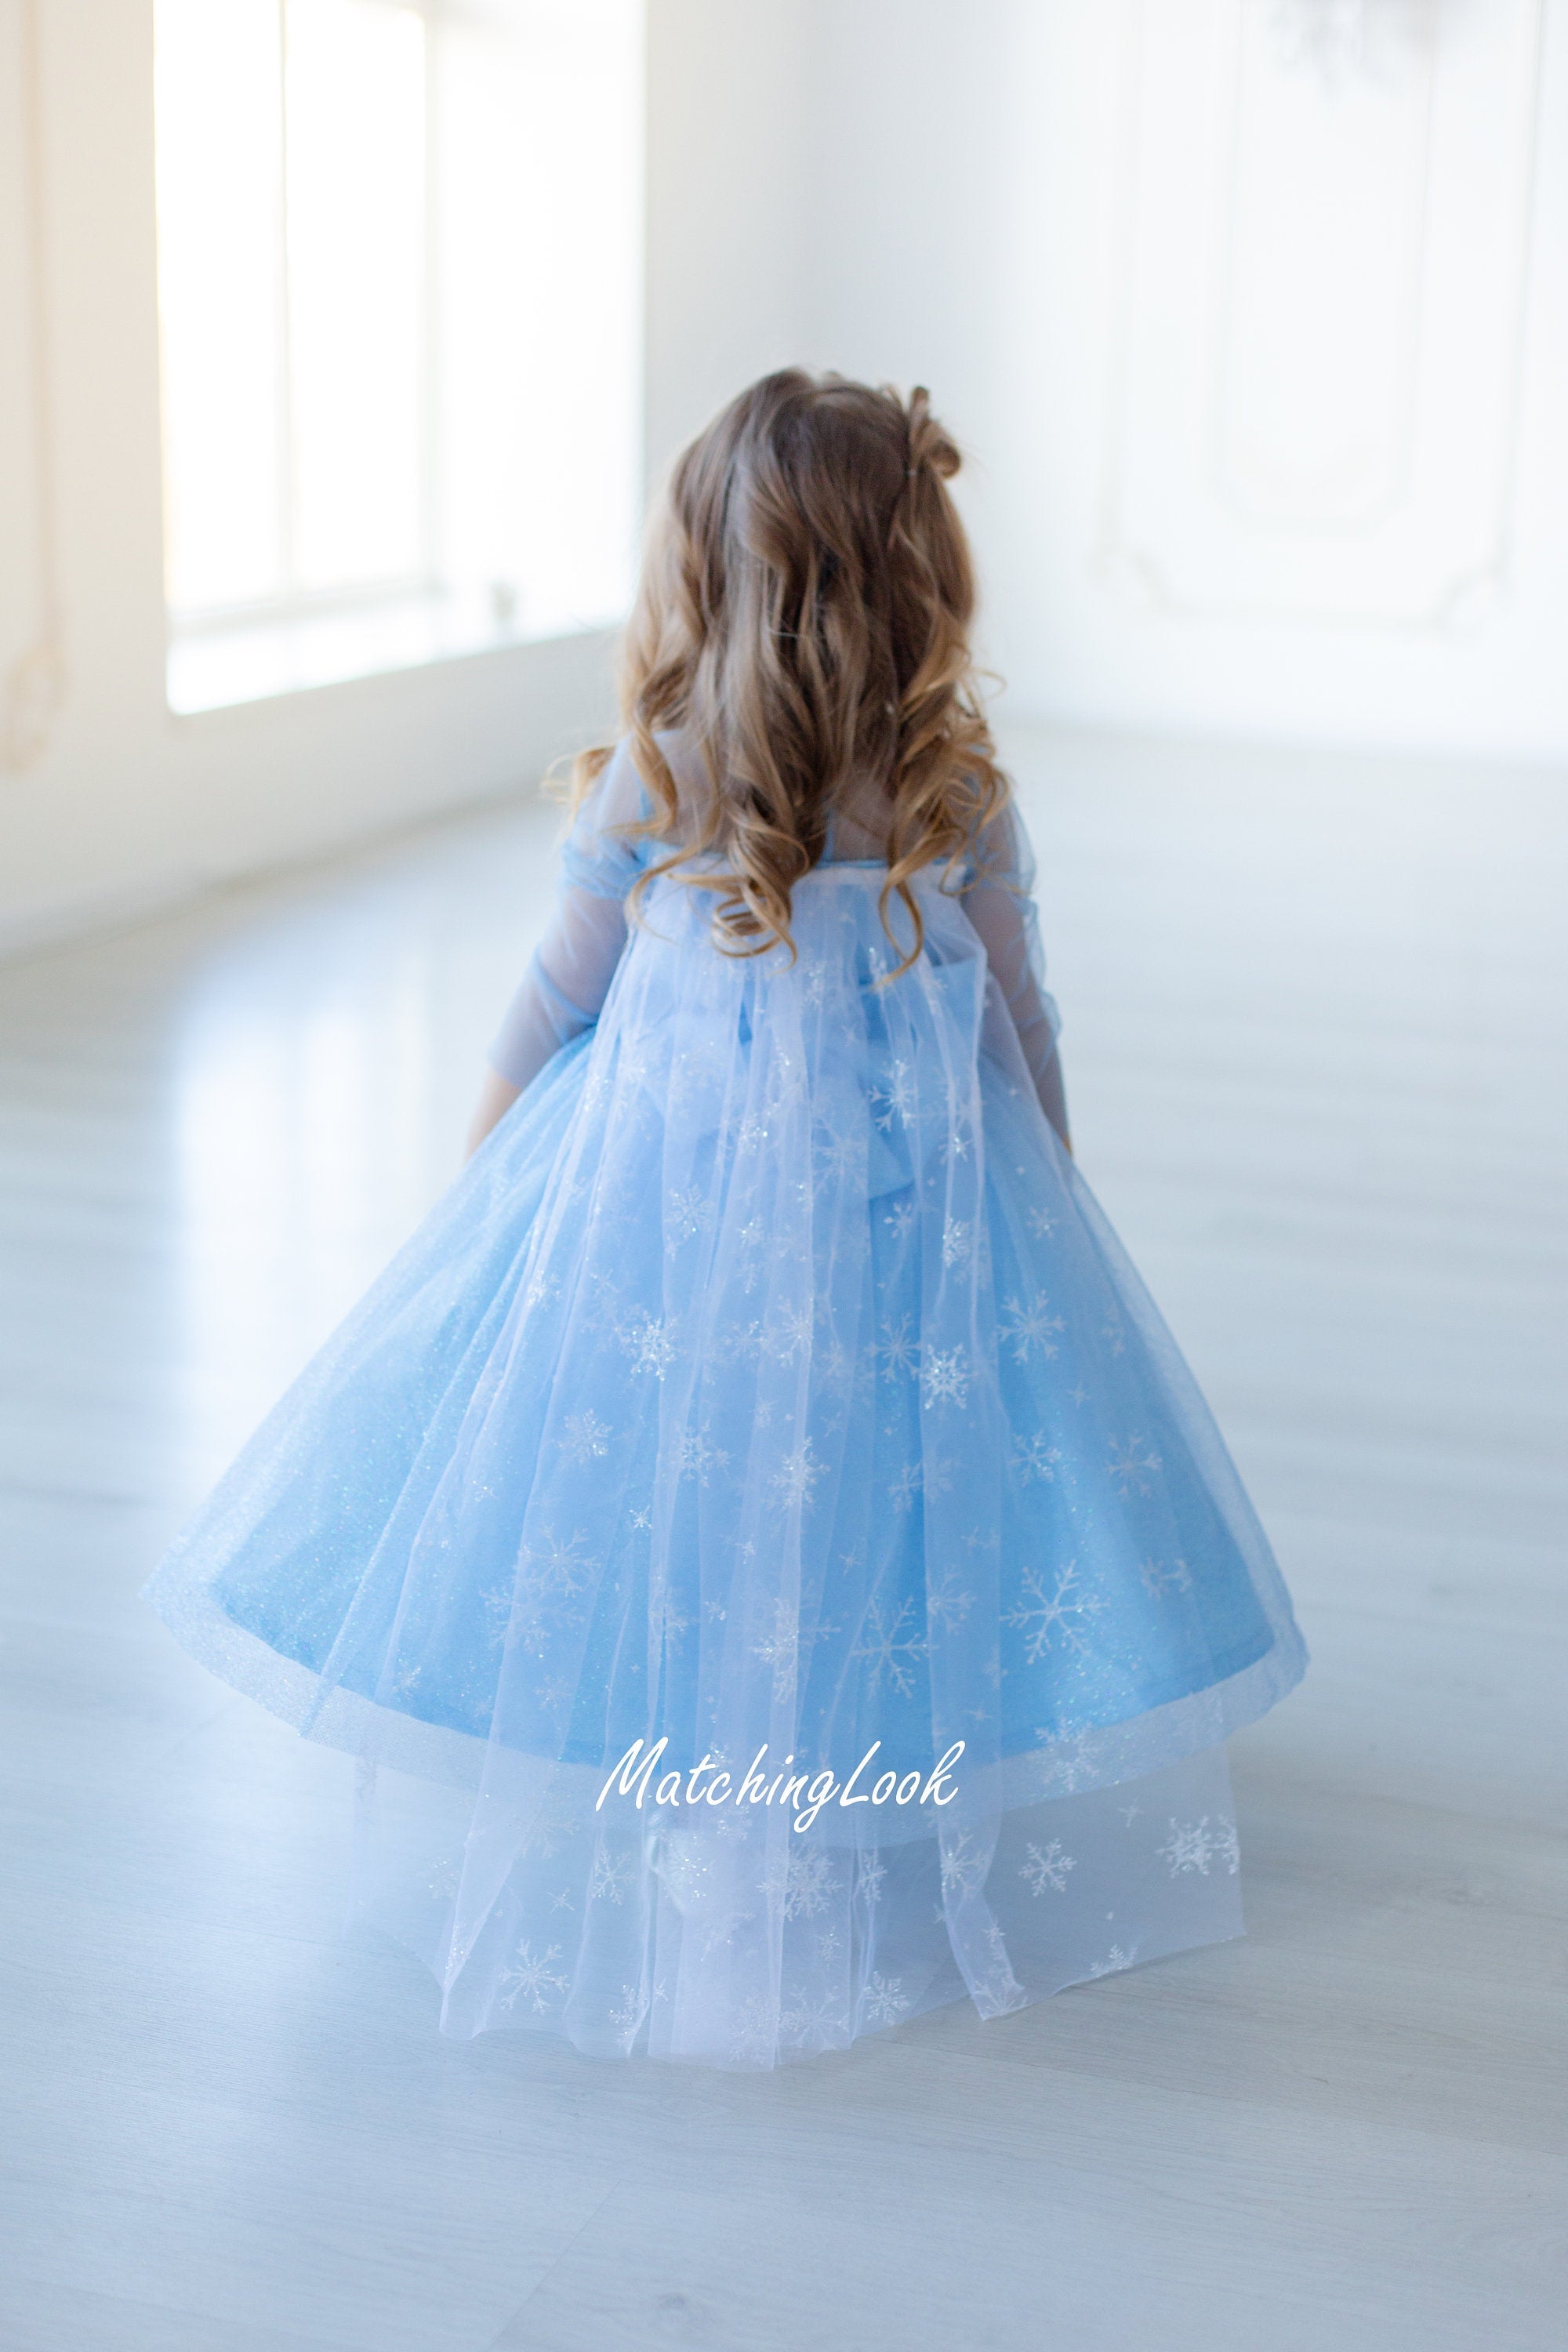 Disney Frozen Elsa Kids' Dress - Size 9-10- Disney Store : Target